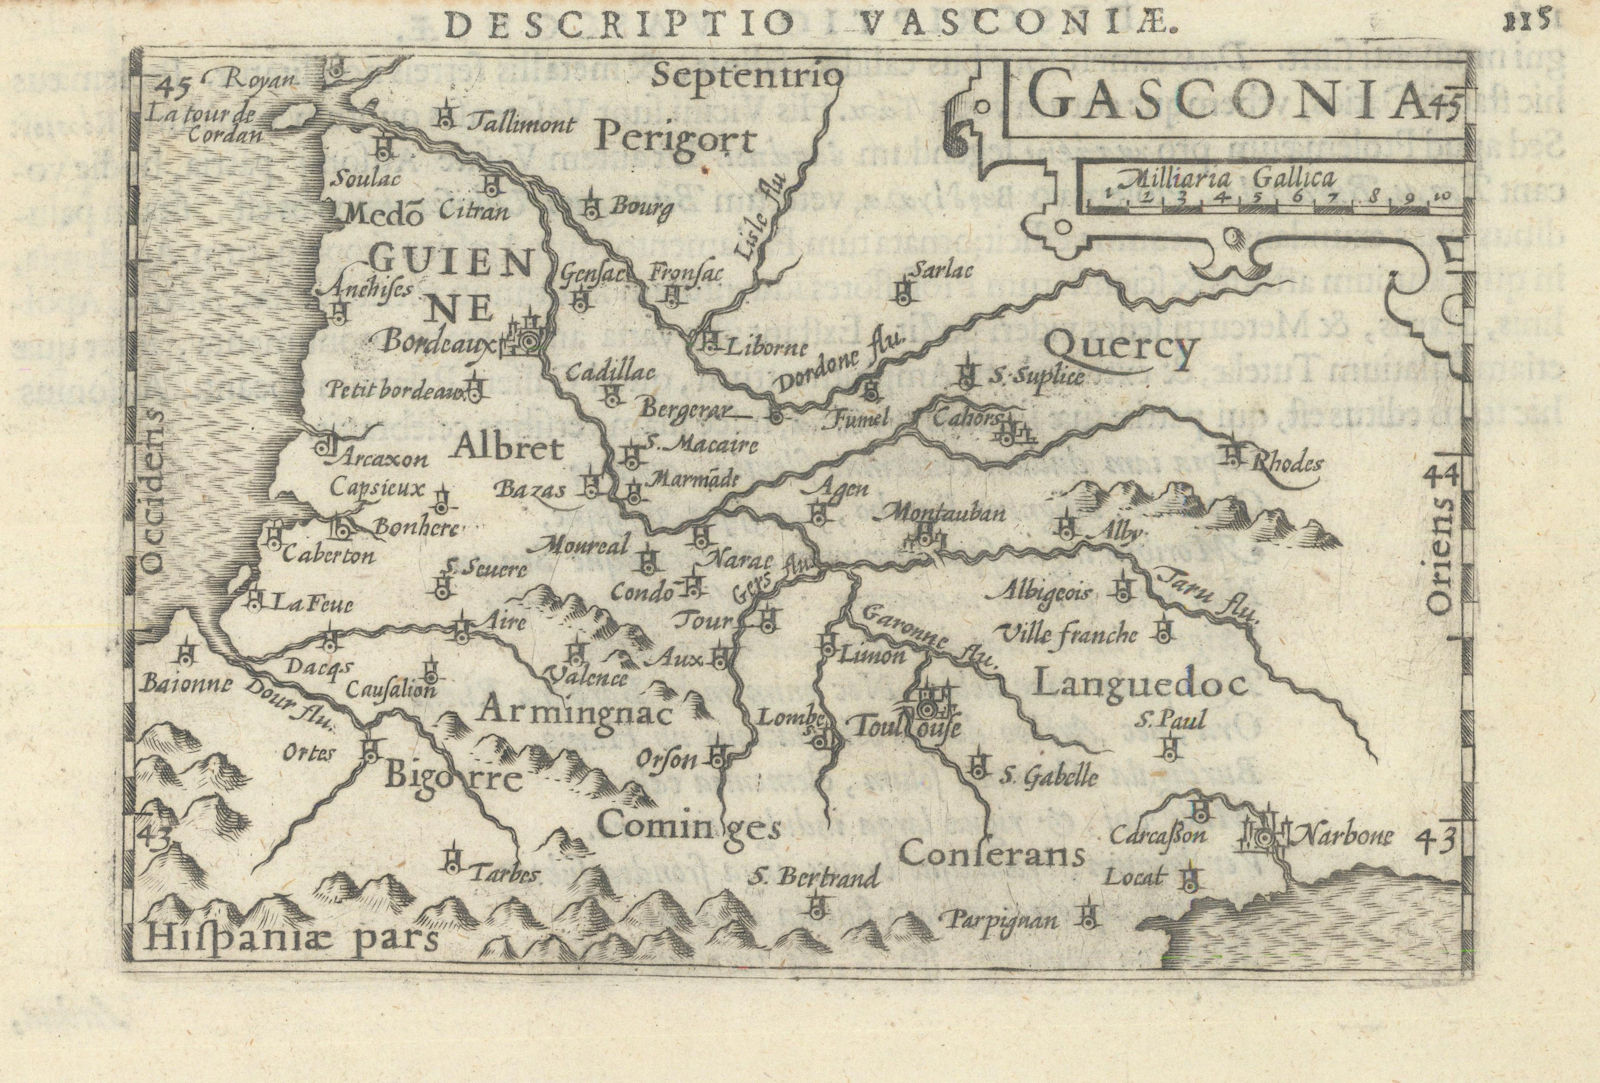 Vasconiae / Gasconia by Bertius / Langenes. Gascony. Southwest France 1603 map